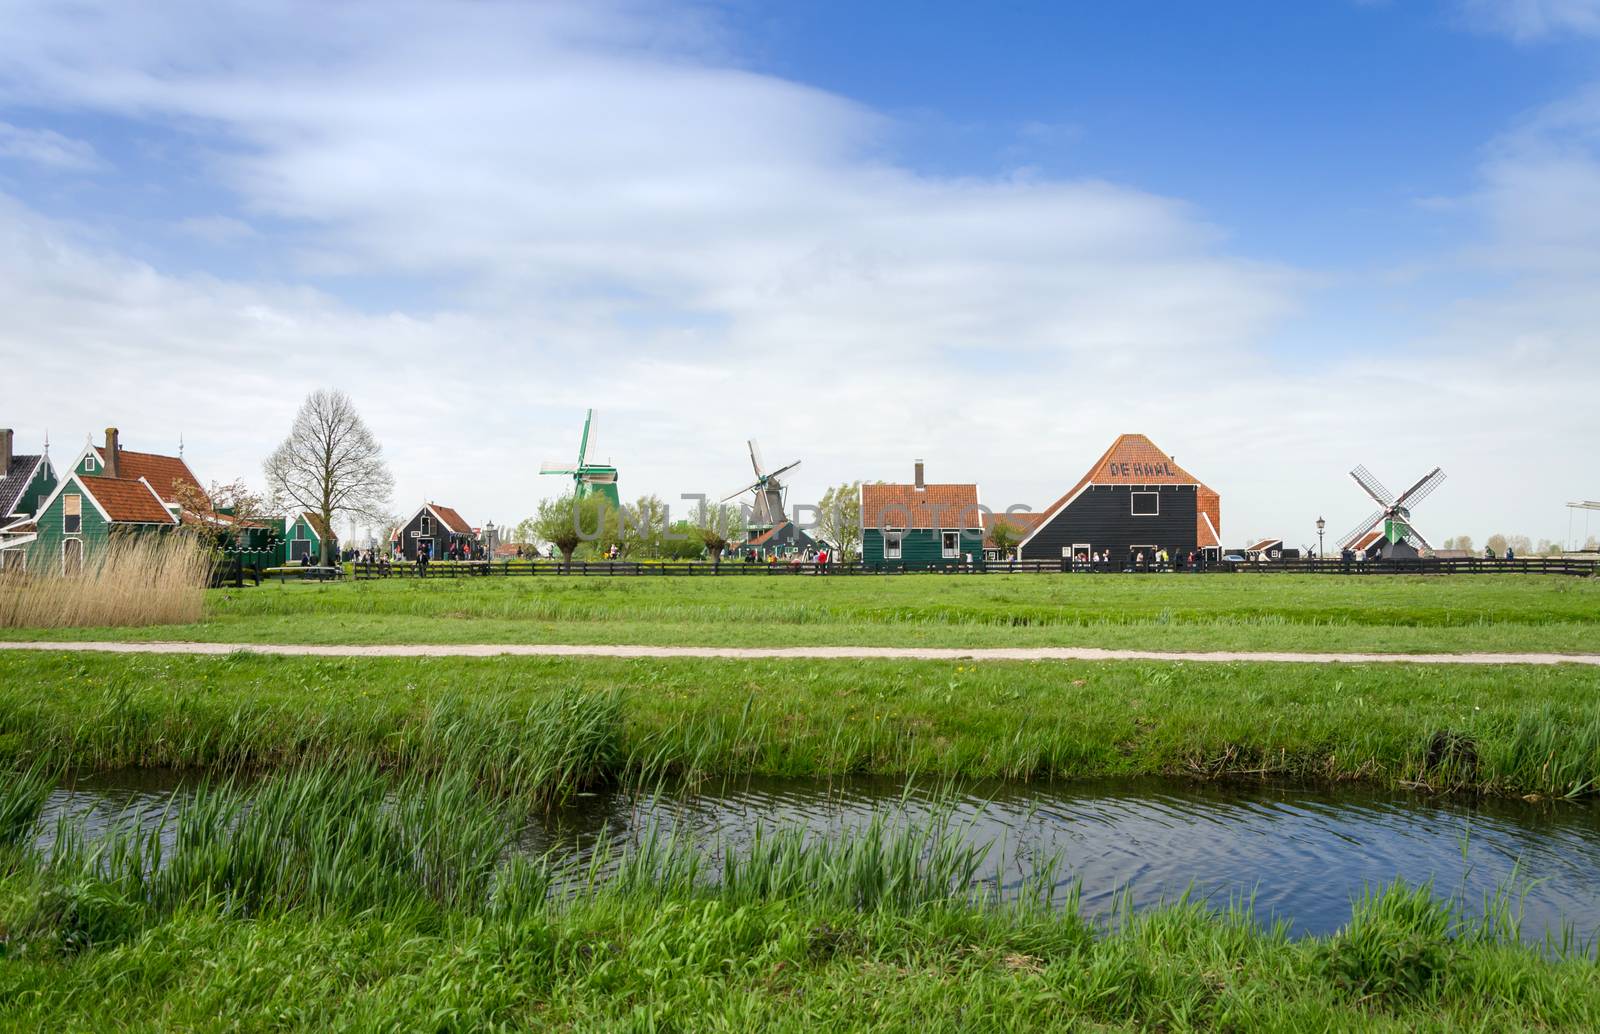 Windmills and rural houses in Zaanse Schans, Netherlands.